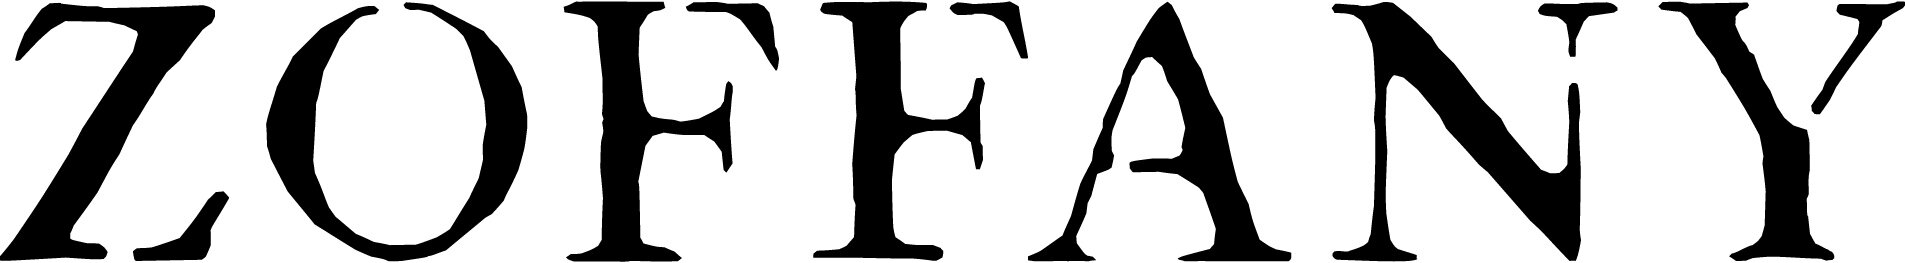 Zoffany Logo (word) black.jpg